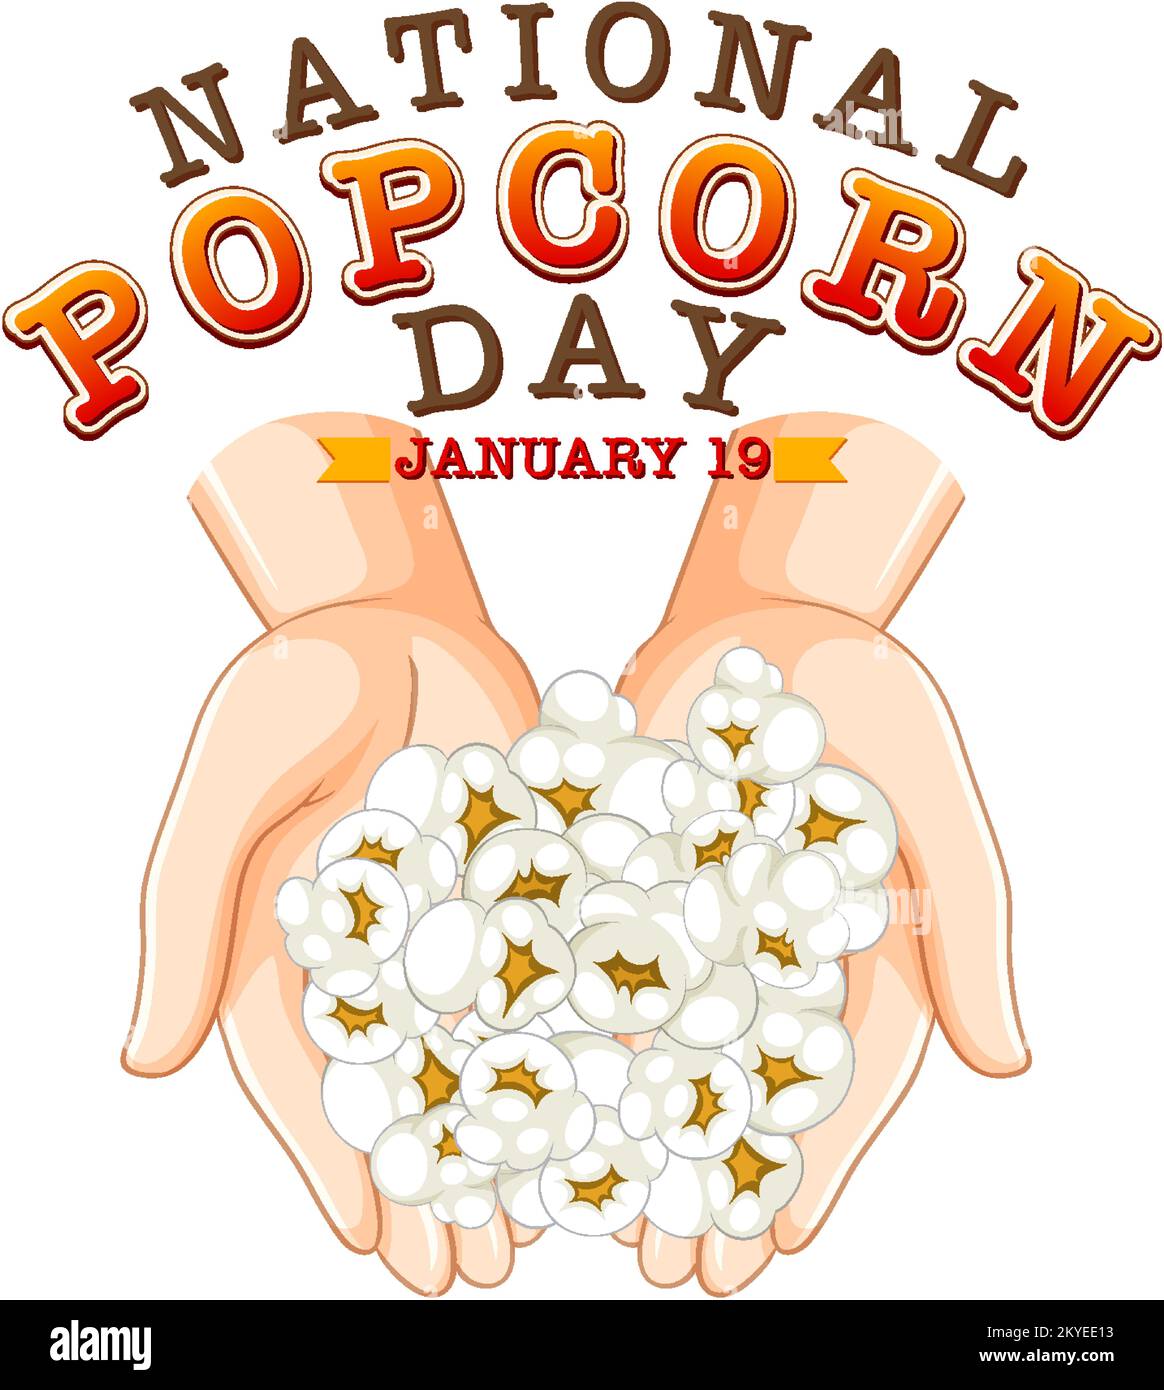 National Popcorn Day Logo Banner illustration Stock Vector